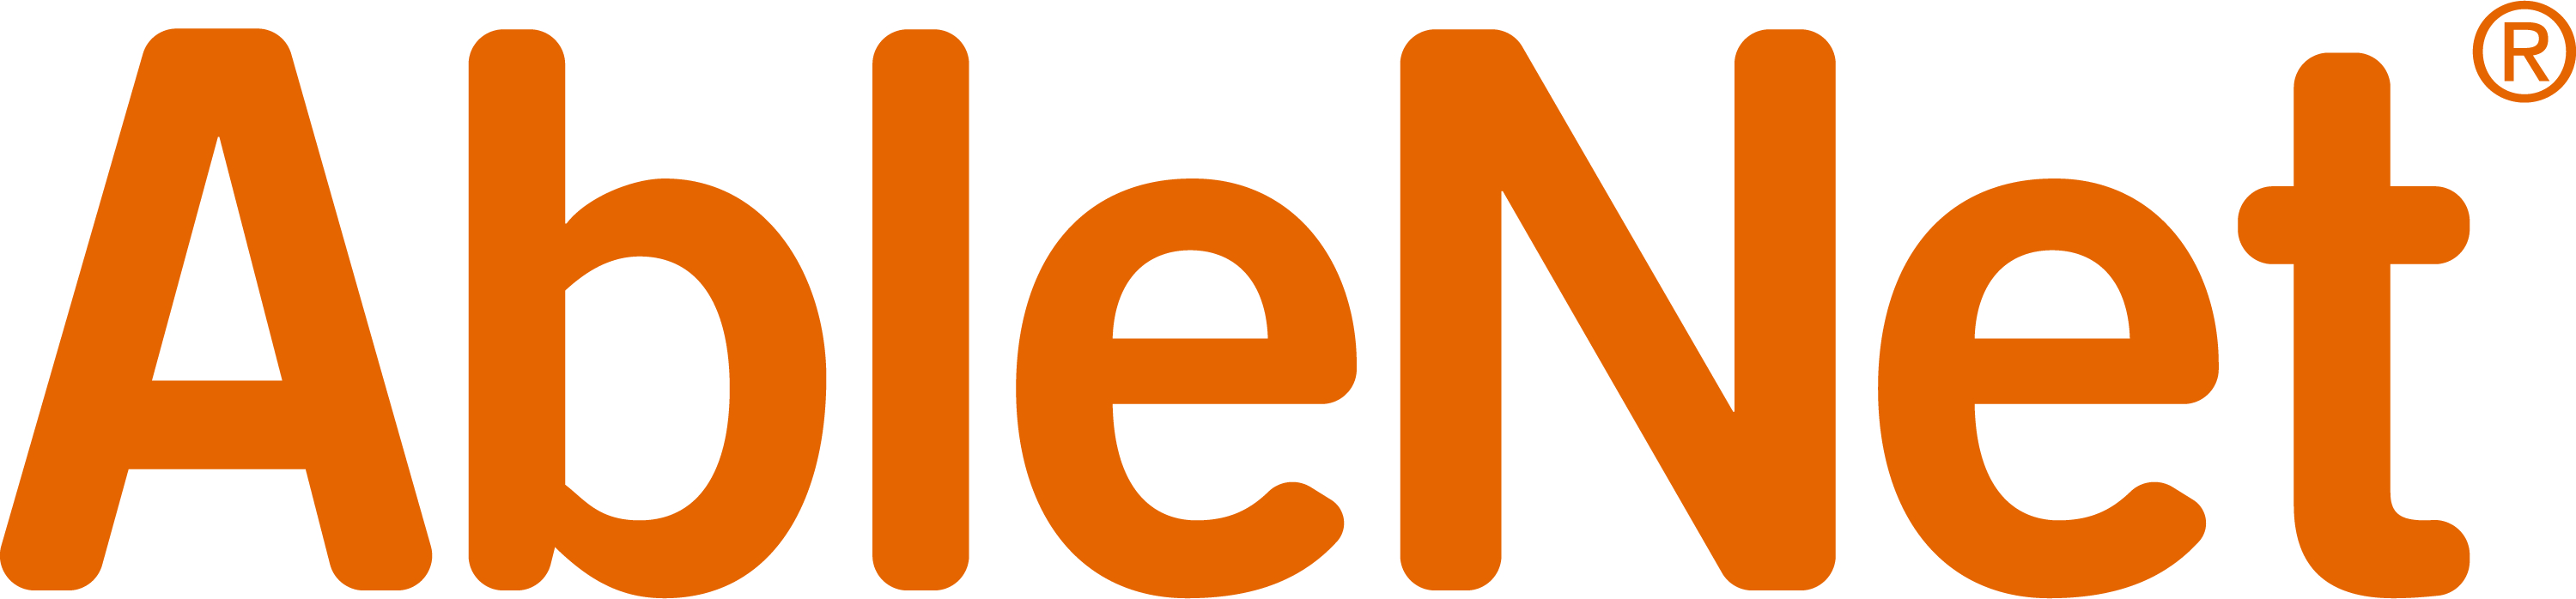 AbleNet Logo 2019 Version  - CMYK - Orange.jpg